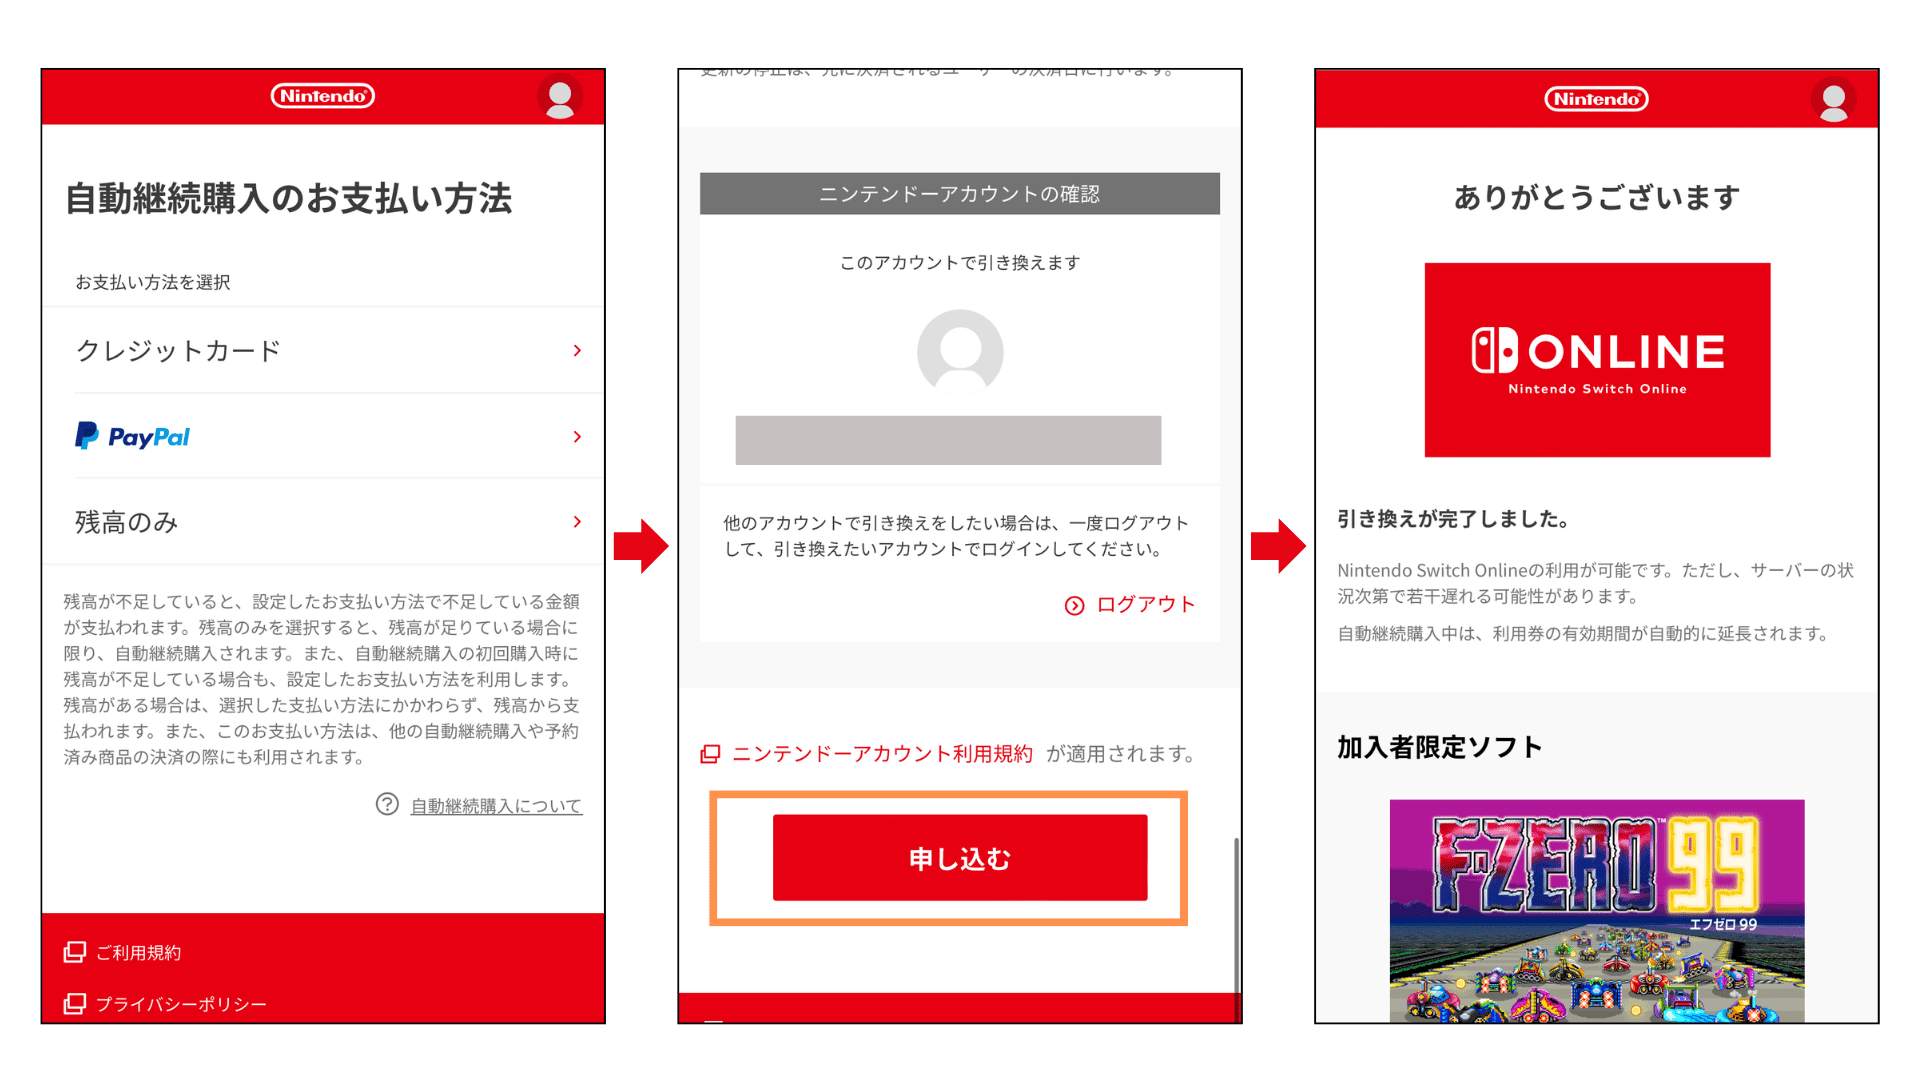 Nintendo Switch Online7日間体験無料チケットの交換ページ